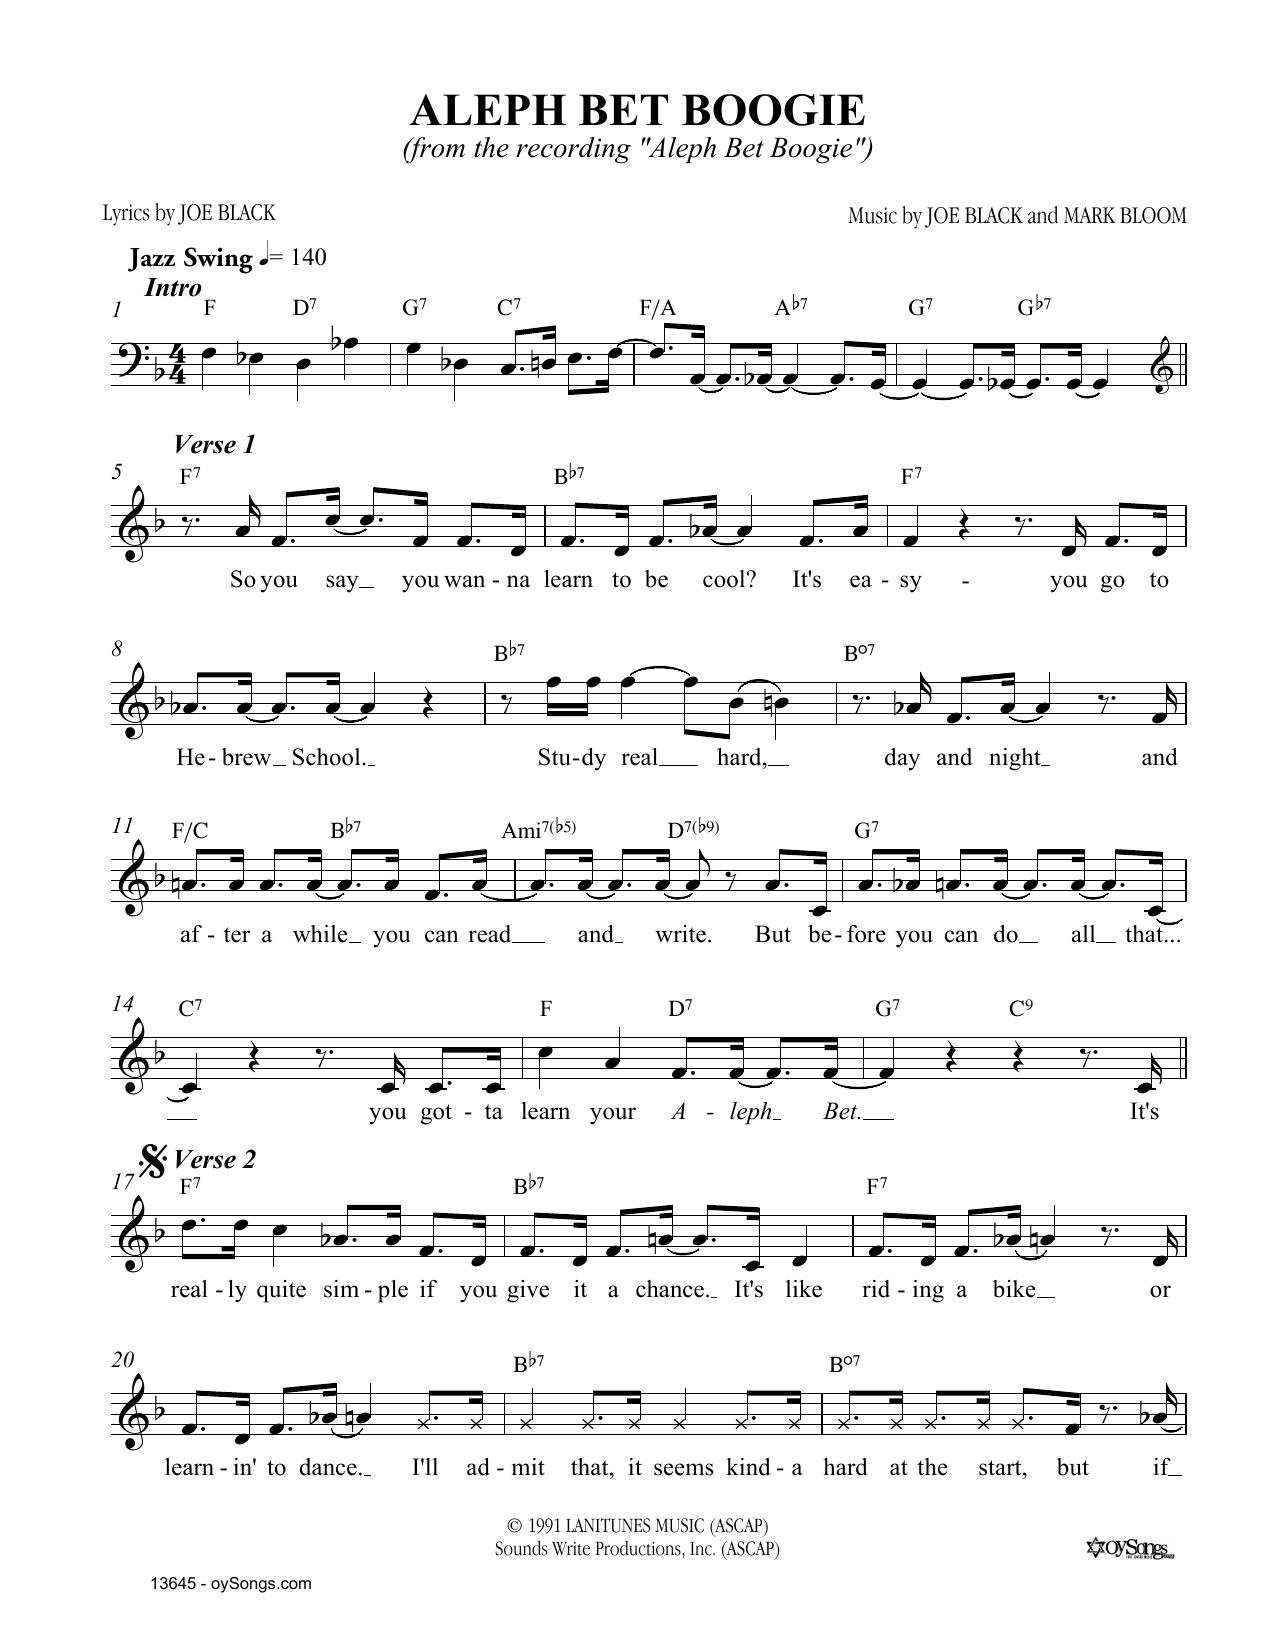 Joe Black Aleph Bet Boogie Sheet Music Notes & Chords for Melody Line, Lyrics & Chords - Download or Print PDF